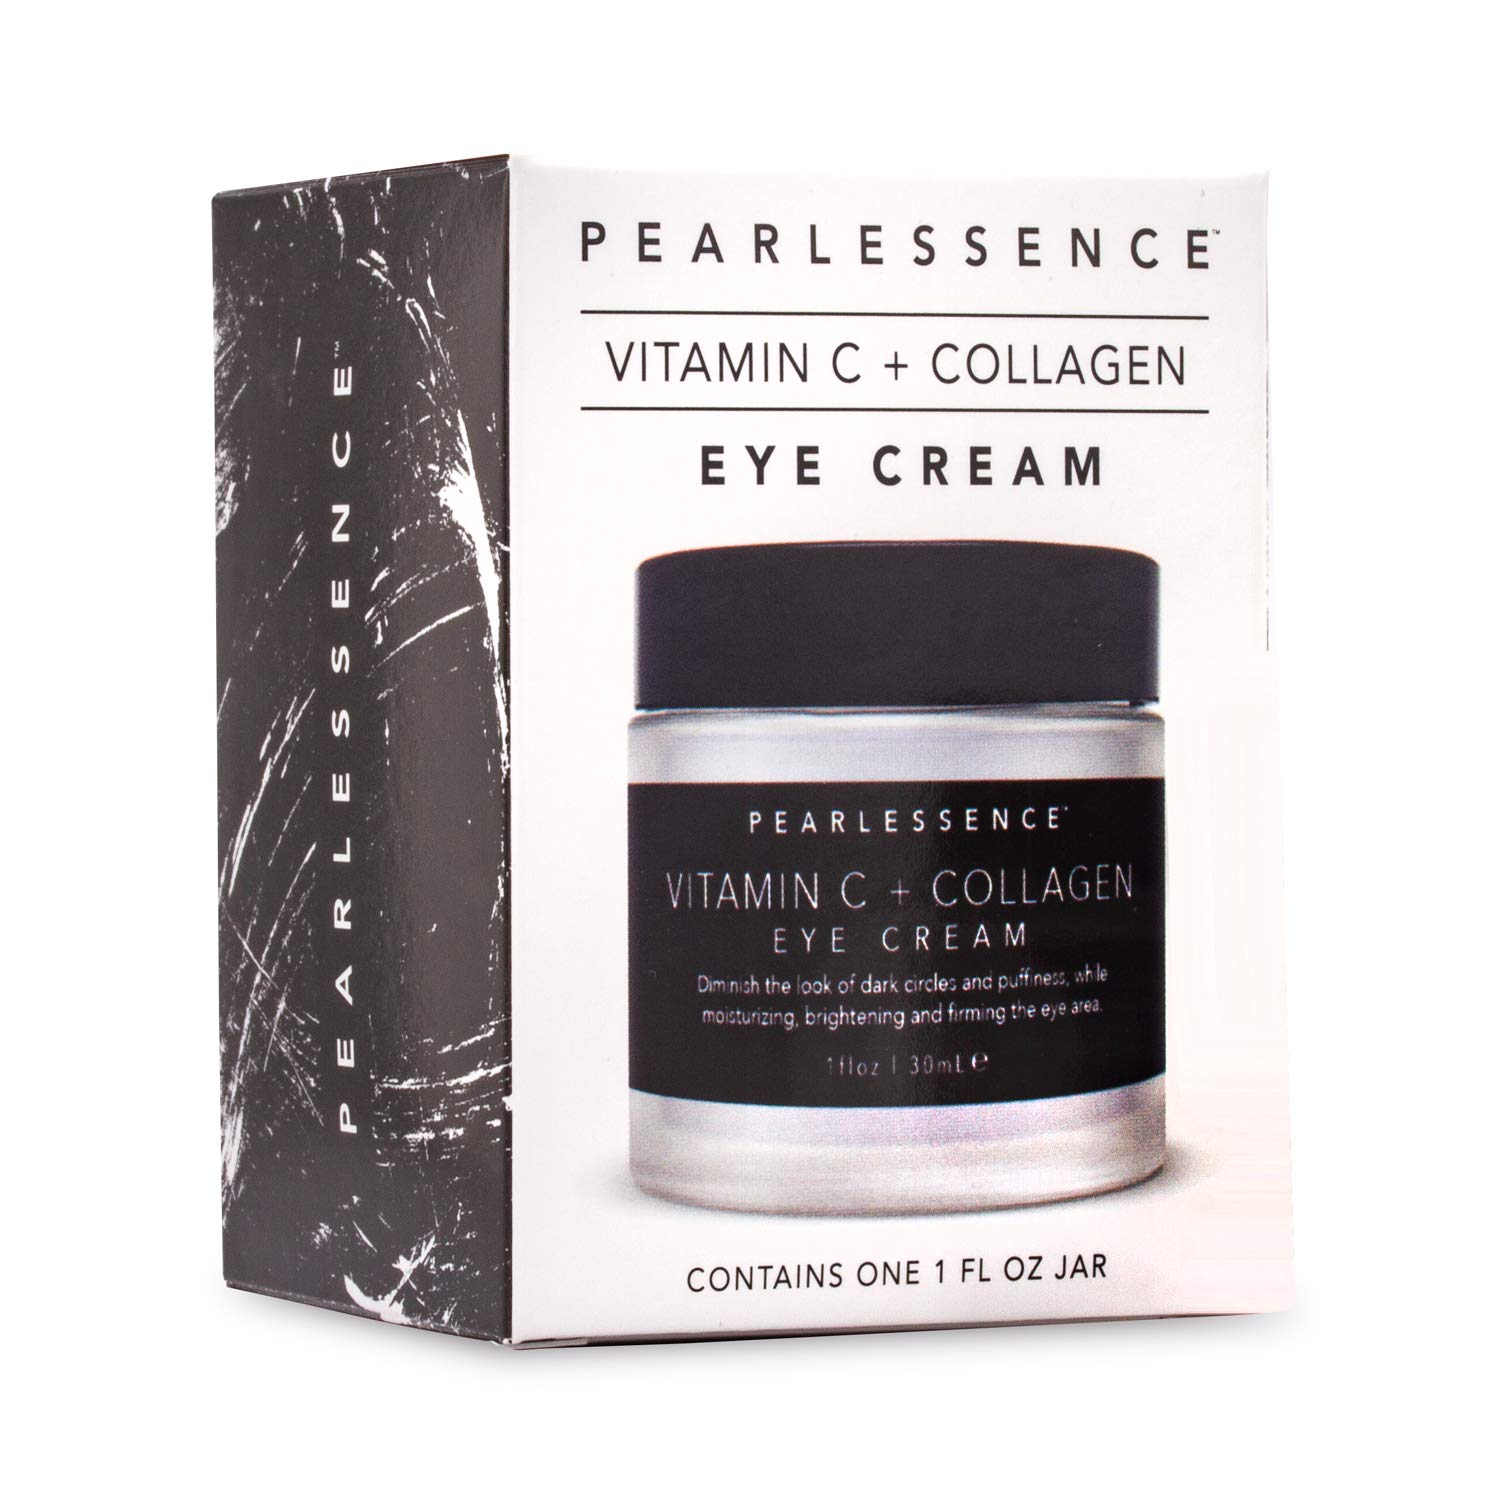 Pearlessence Vitamin C + Collagen Eye Cream | Helps Reduce Puffiness & Diminish Look of Dark Circles | Moisturizing to Brighten & Firm Eyes | Made in USA & Cruelty Free (1oz)